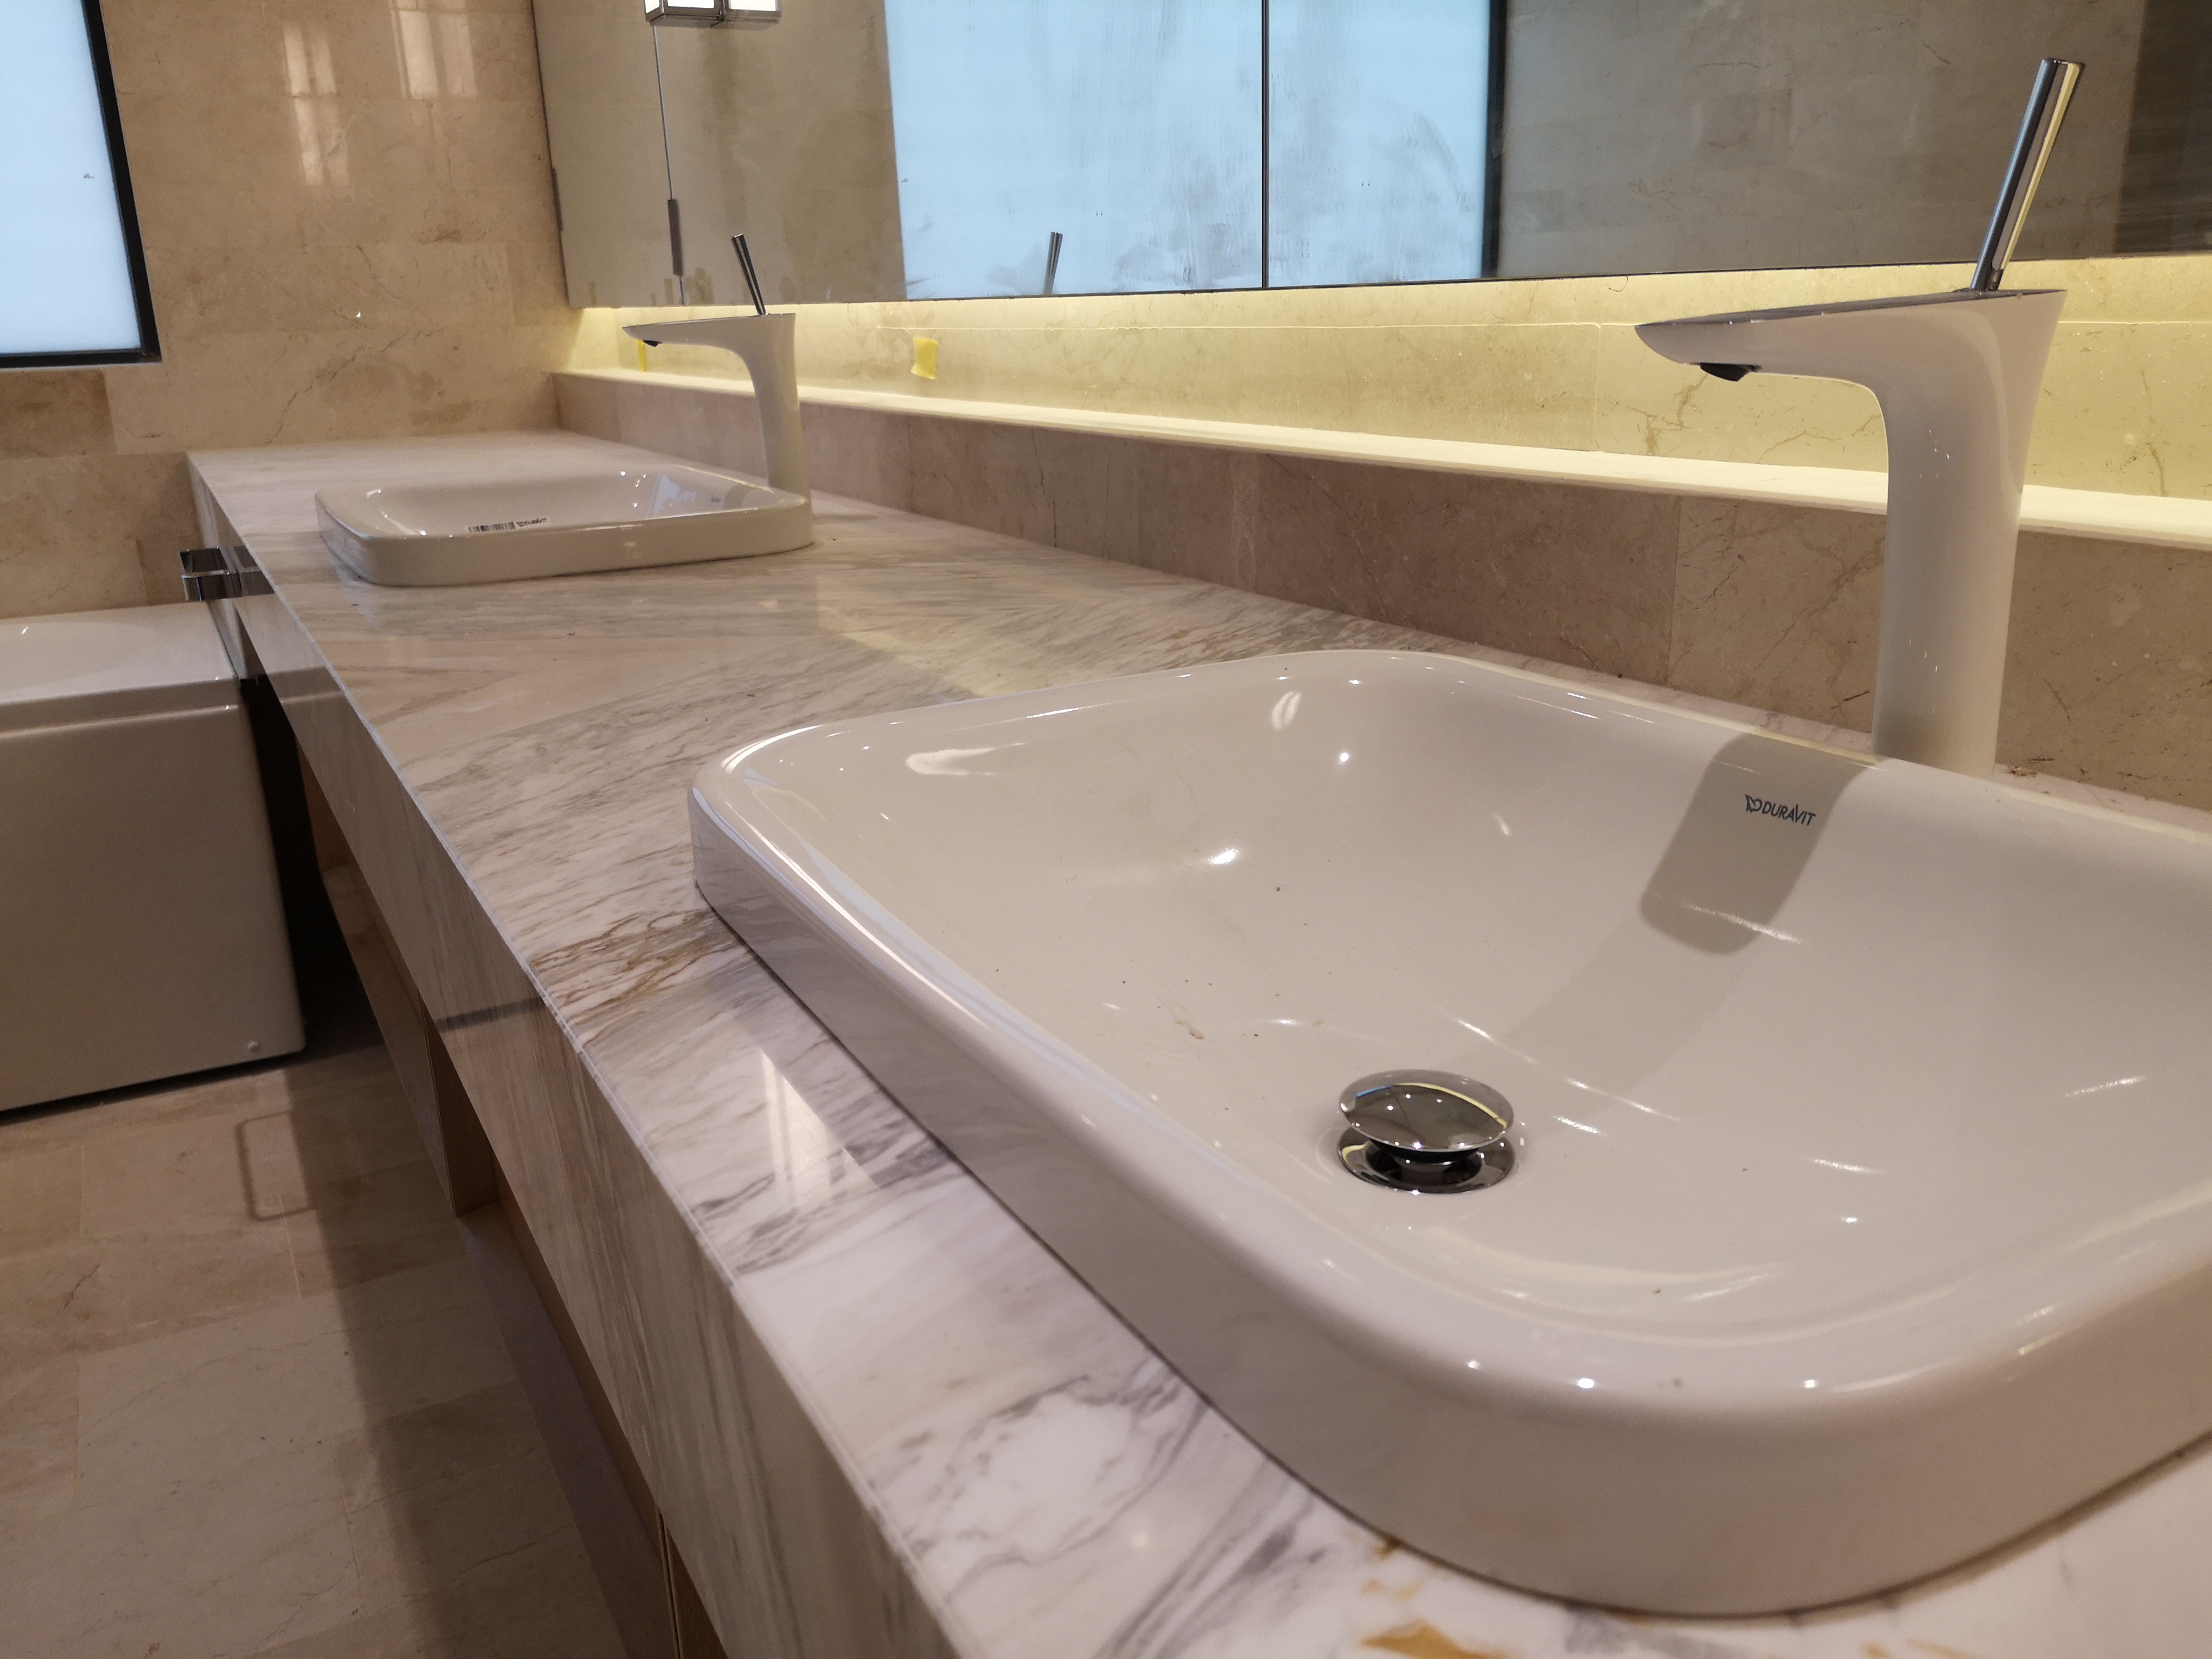 Gallery - Bathroom | Express Marble Sdn Bhd | Malaysia | Marble, Granite, Natural Stone, Interior Design